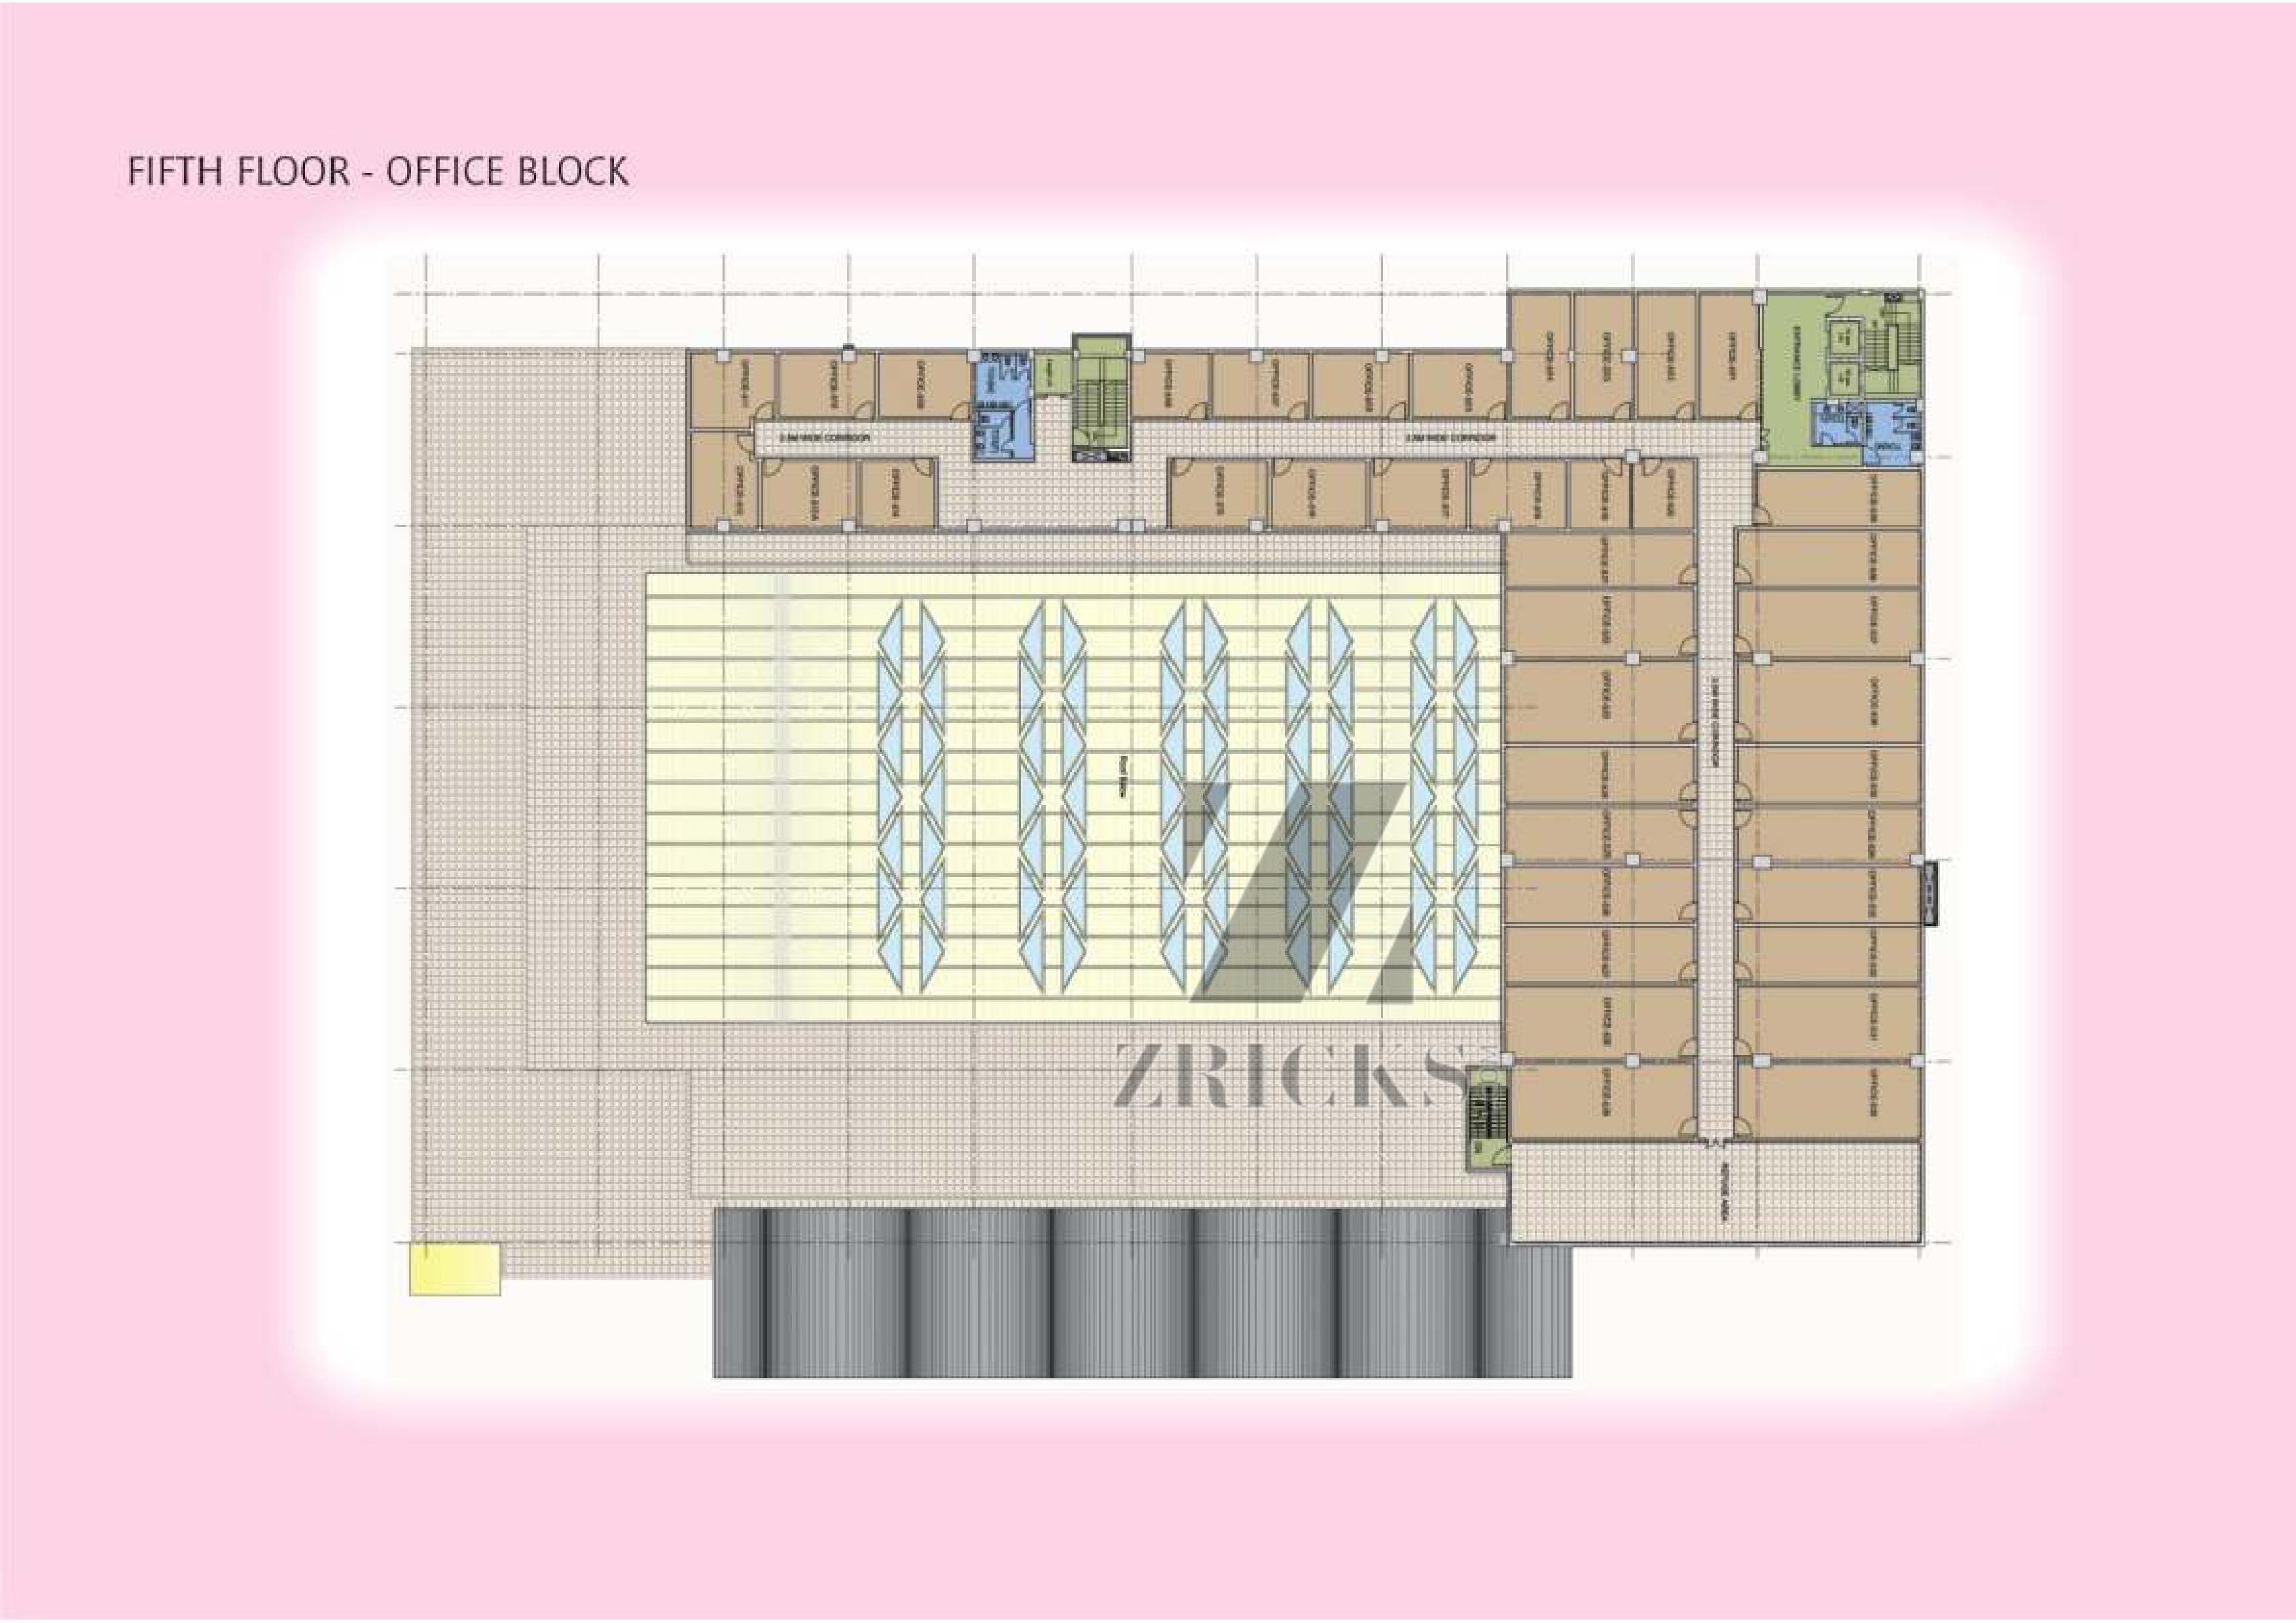 Genesis Mall Floor Plan